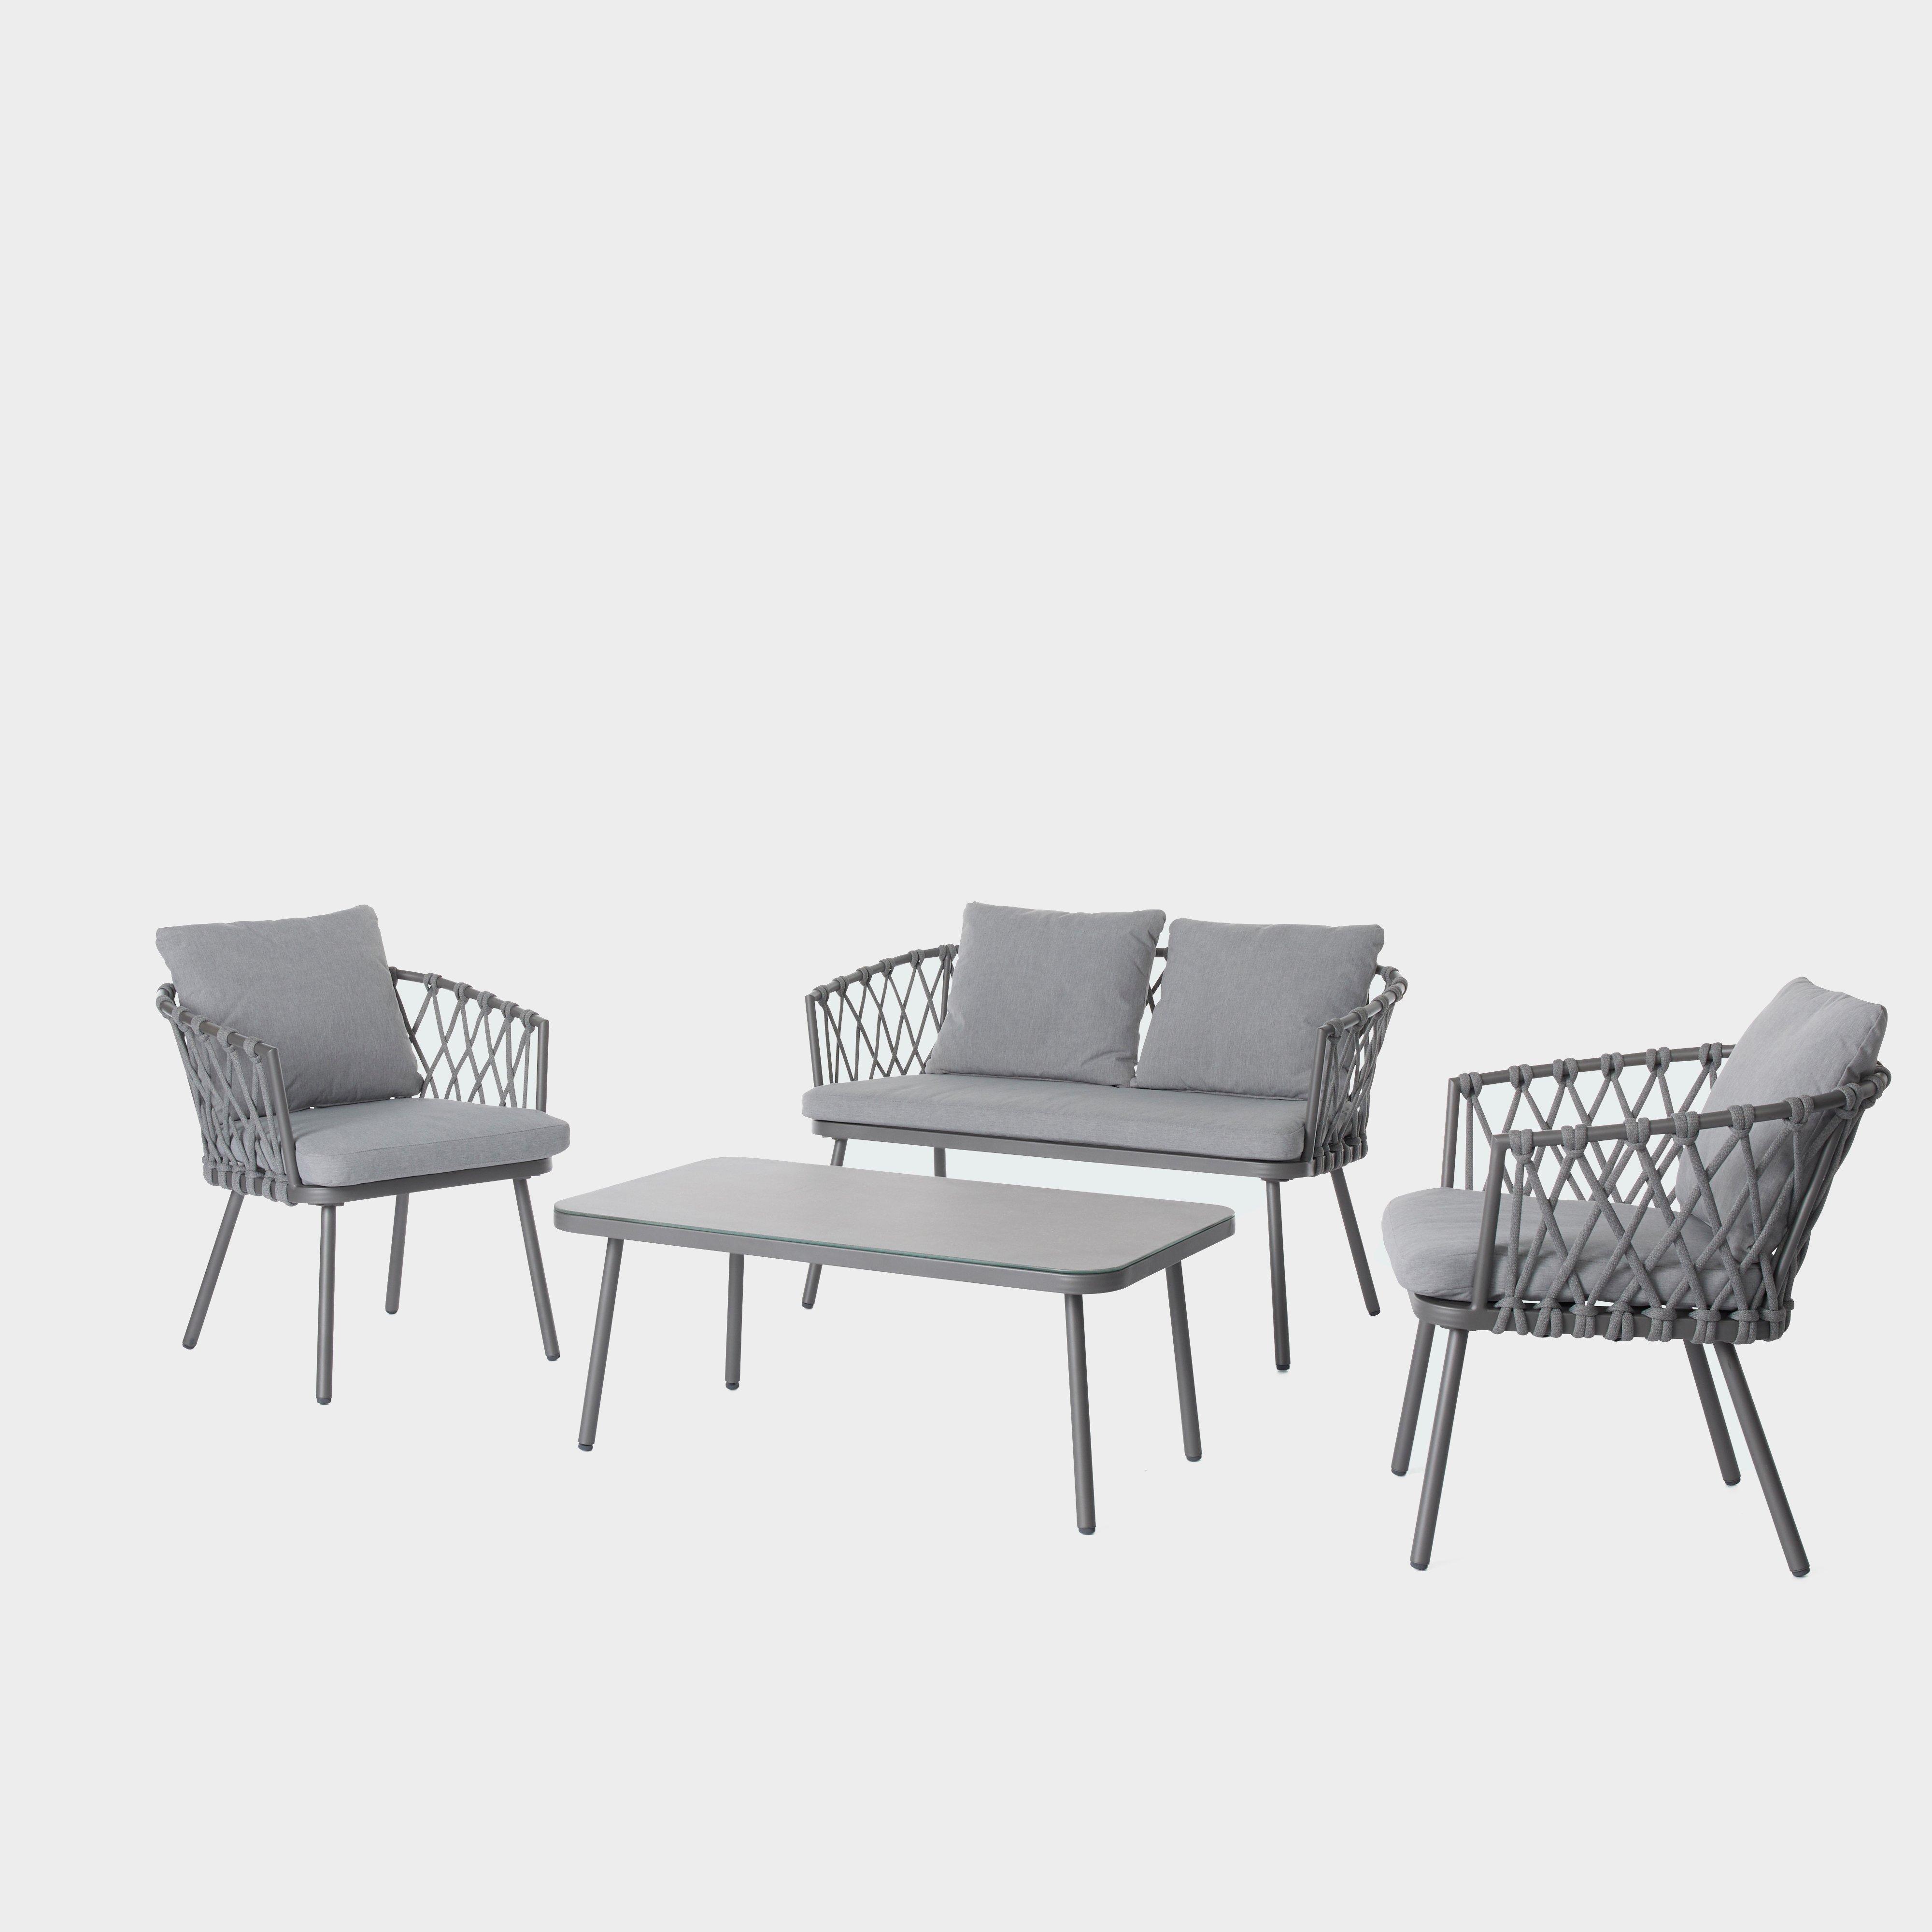 Image of Hi-Gear Penryn Lounge Set - Grey/Grey, Grey/Grey